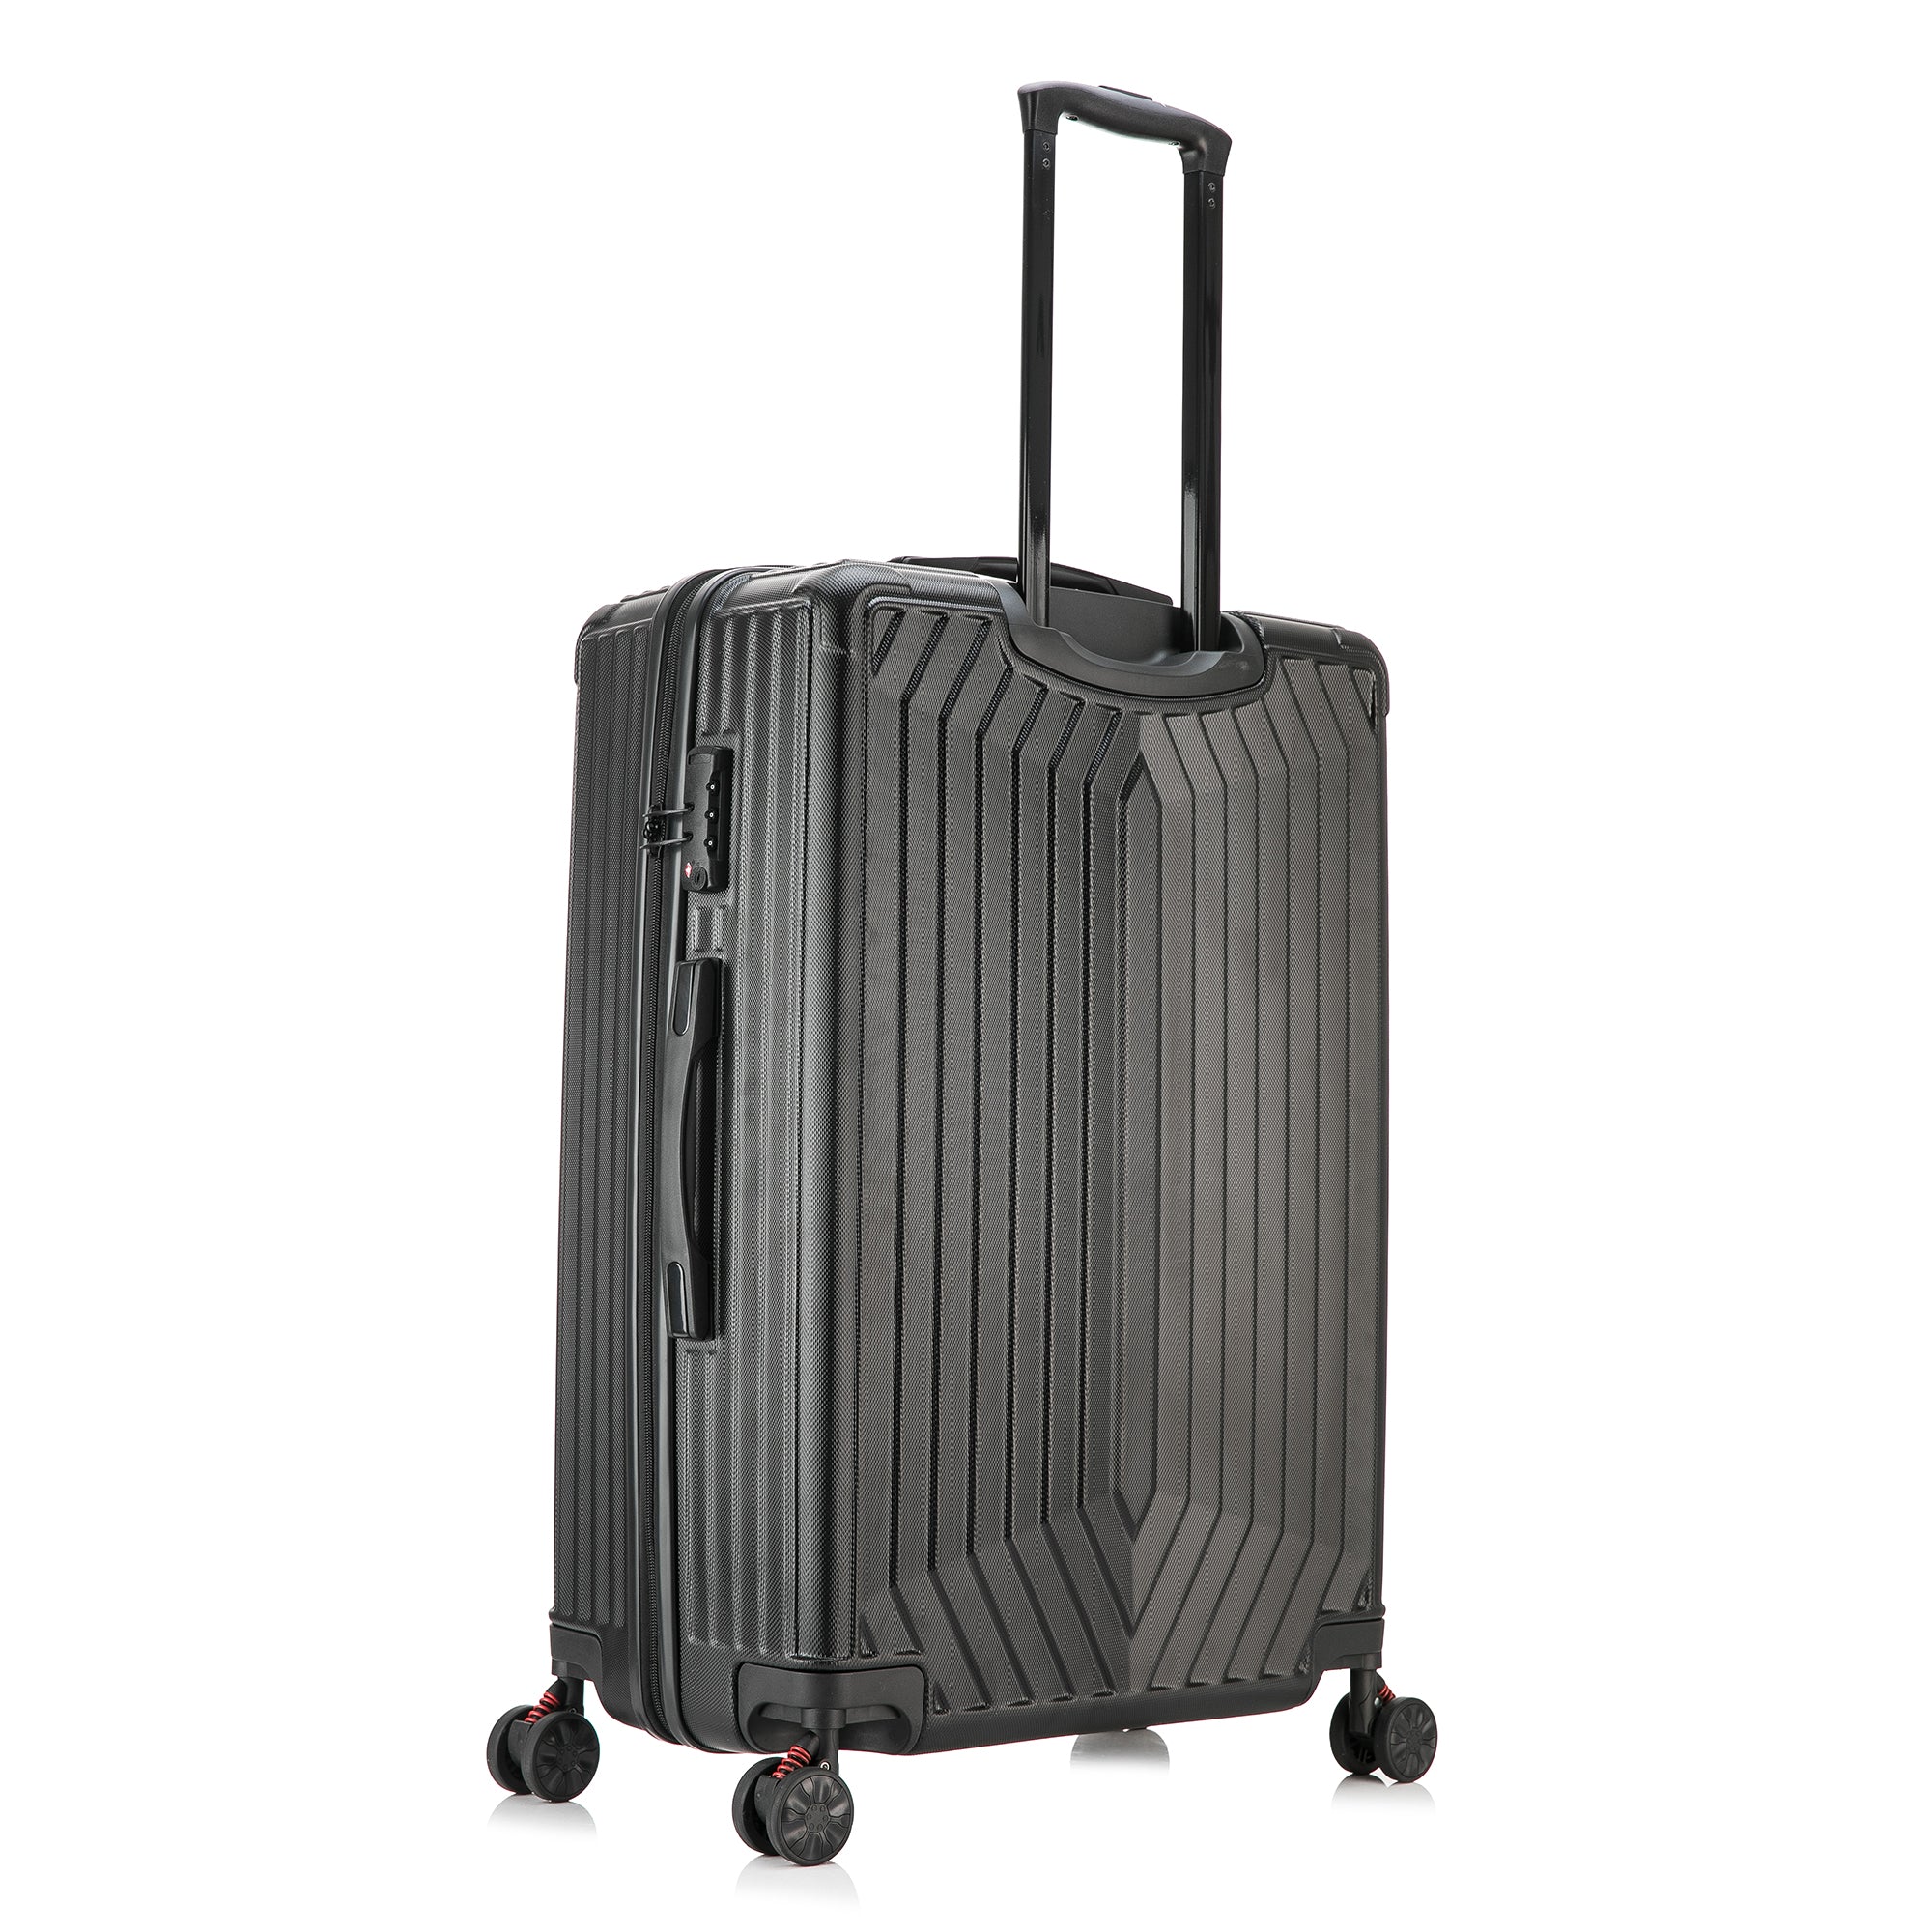 DUKAP STRATOS lightweight hardside spinner 3 piece luggage set  20'',24'', 28'' inch Black